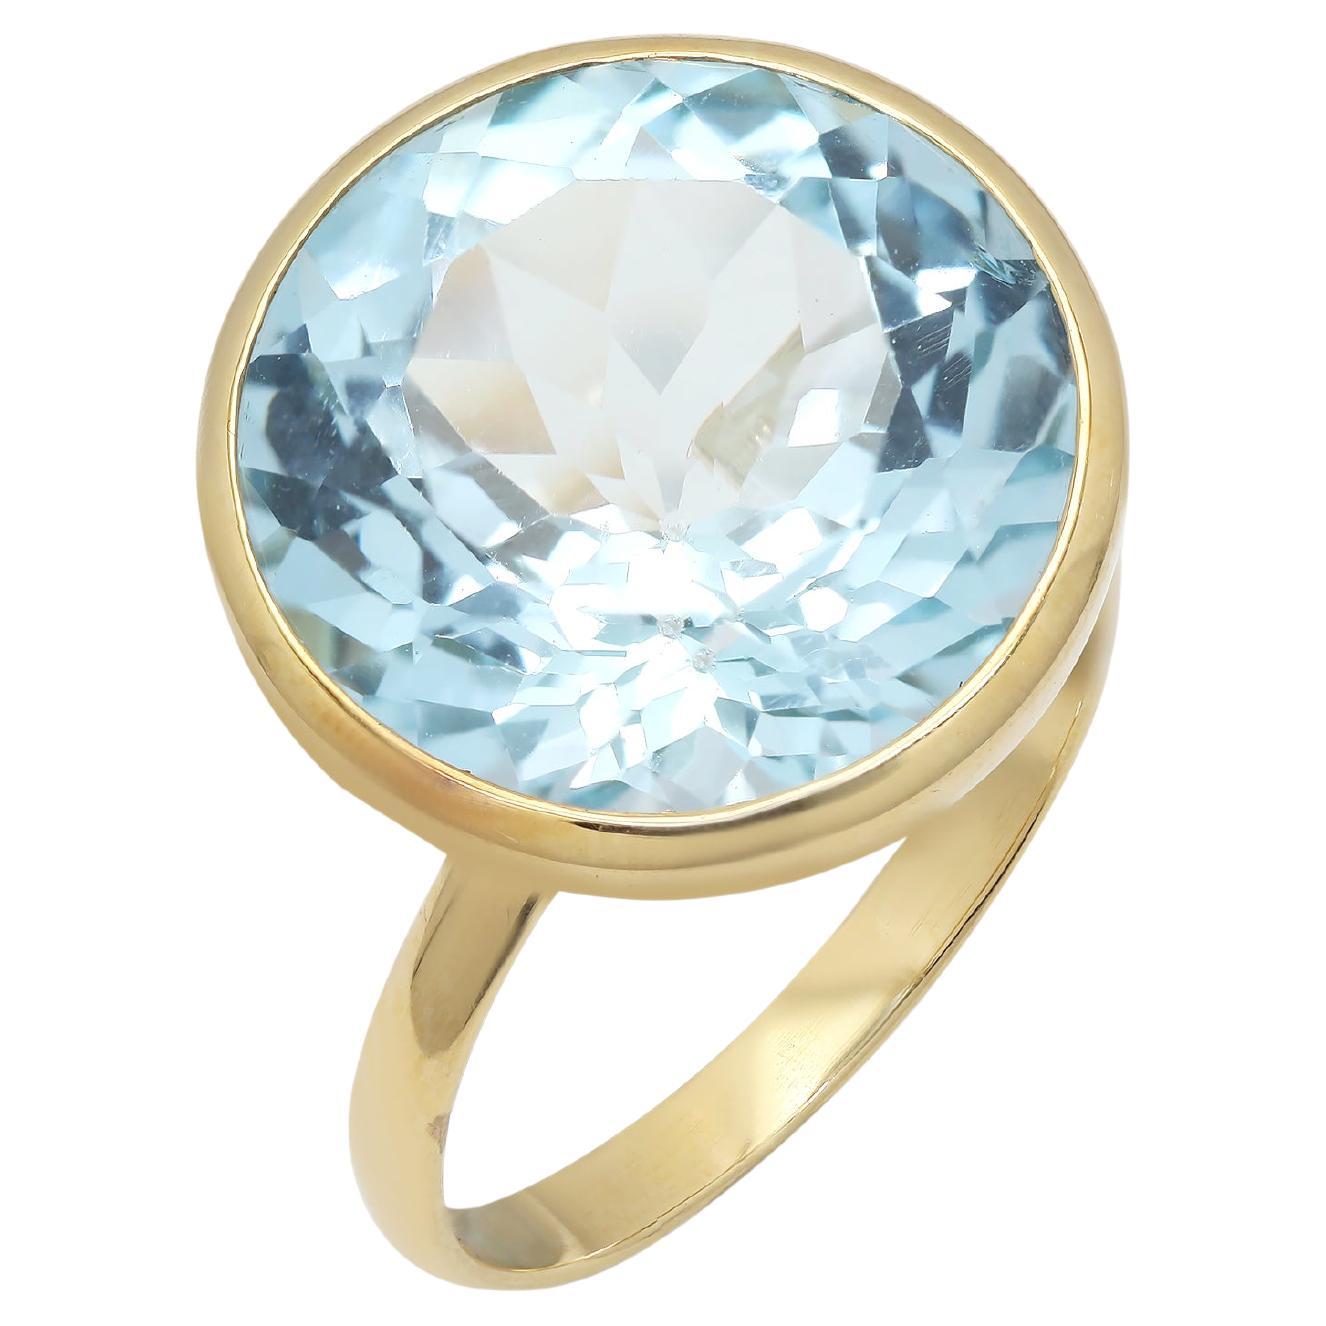 For Sale:  4 Carat Bezel Set Aquamarine Gemstone Ring in 18K Solid Yellow Gold